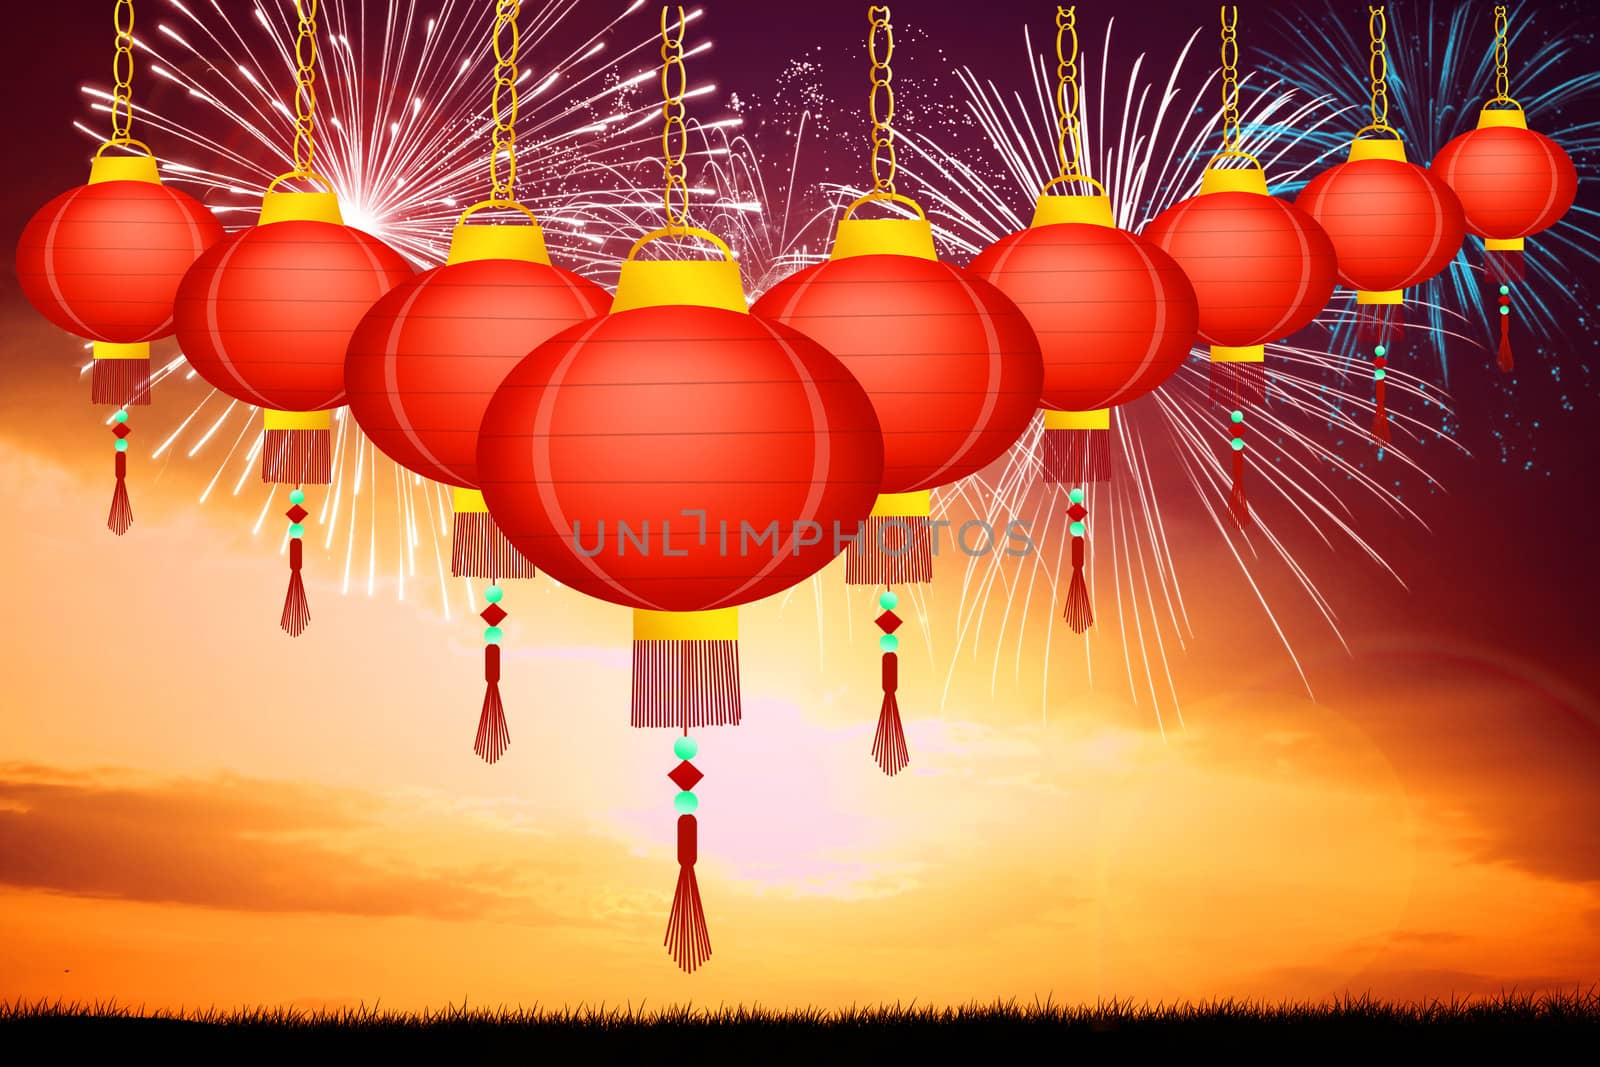 Chinese New Year by adrenalina